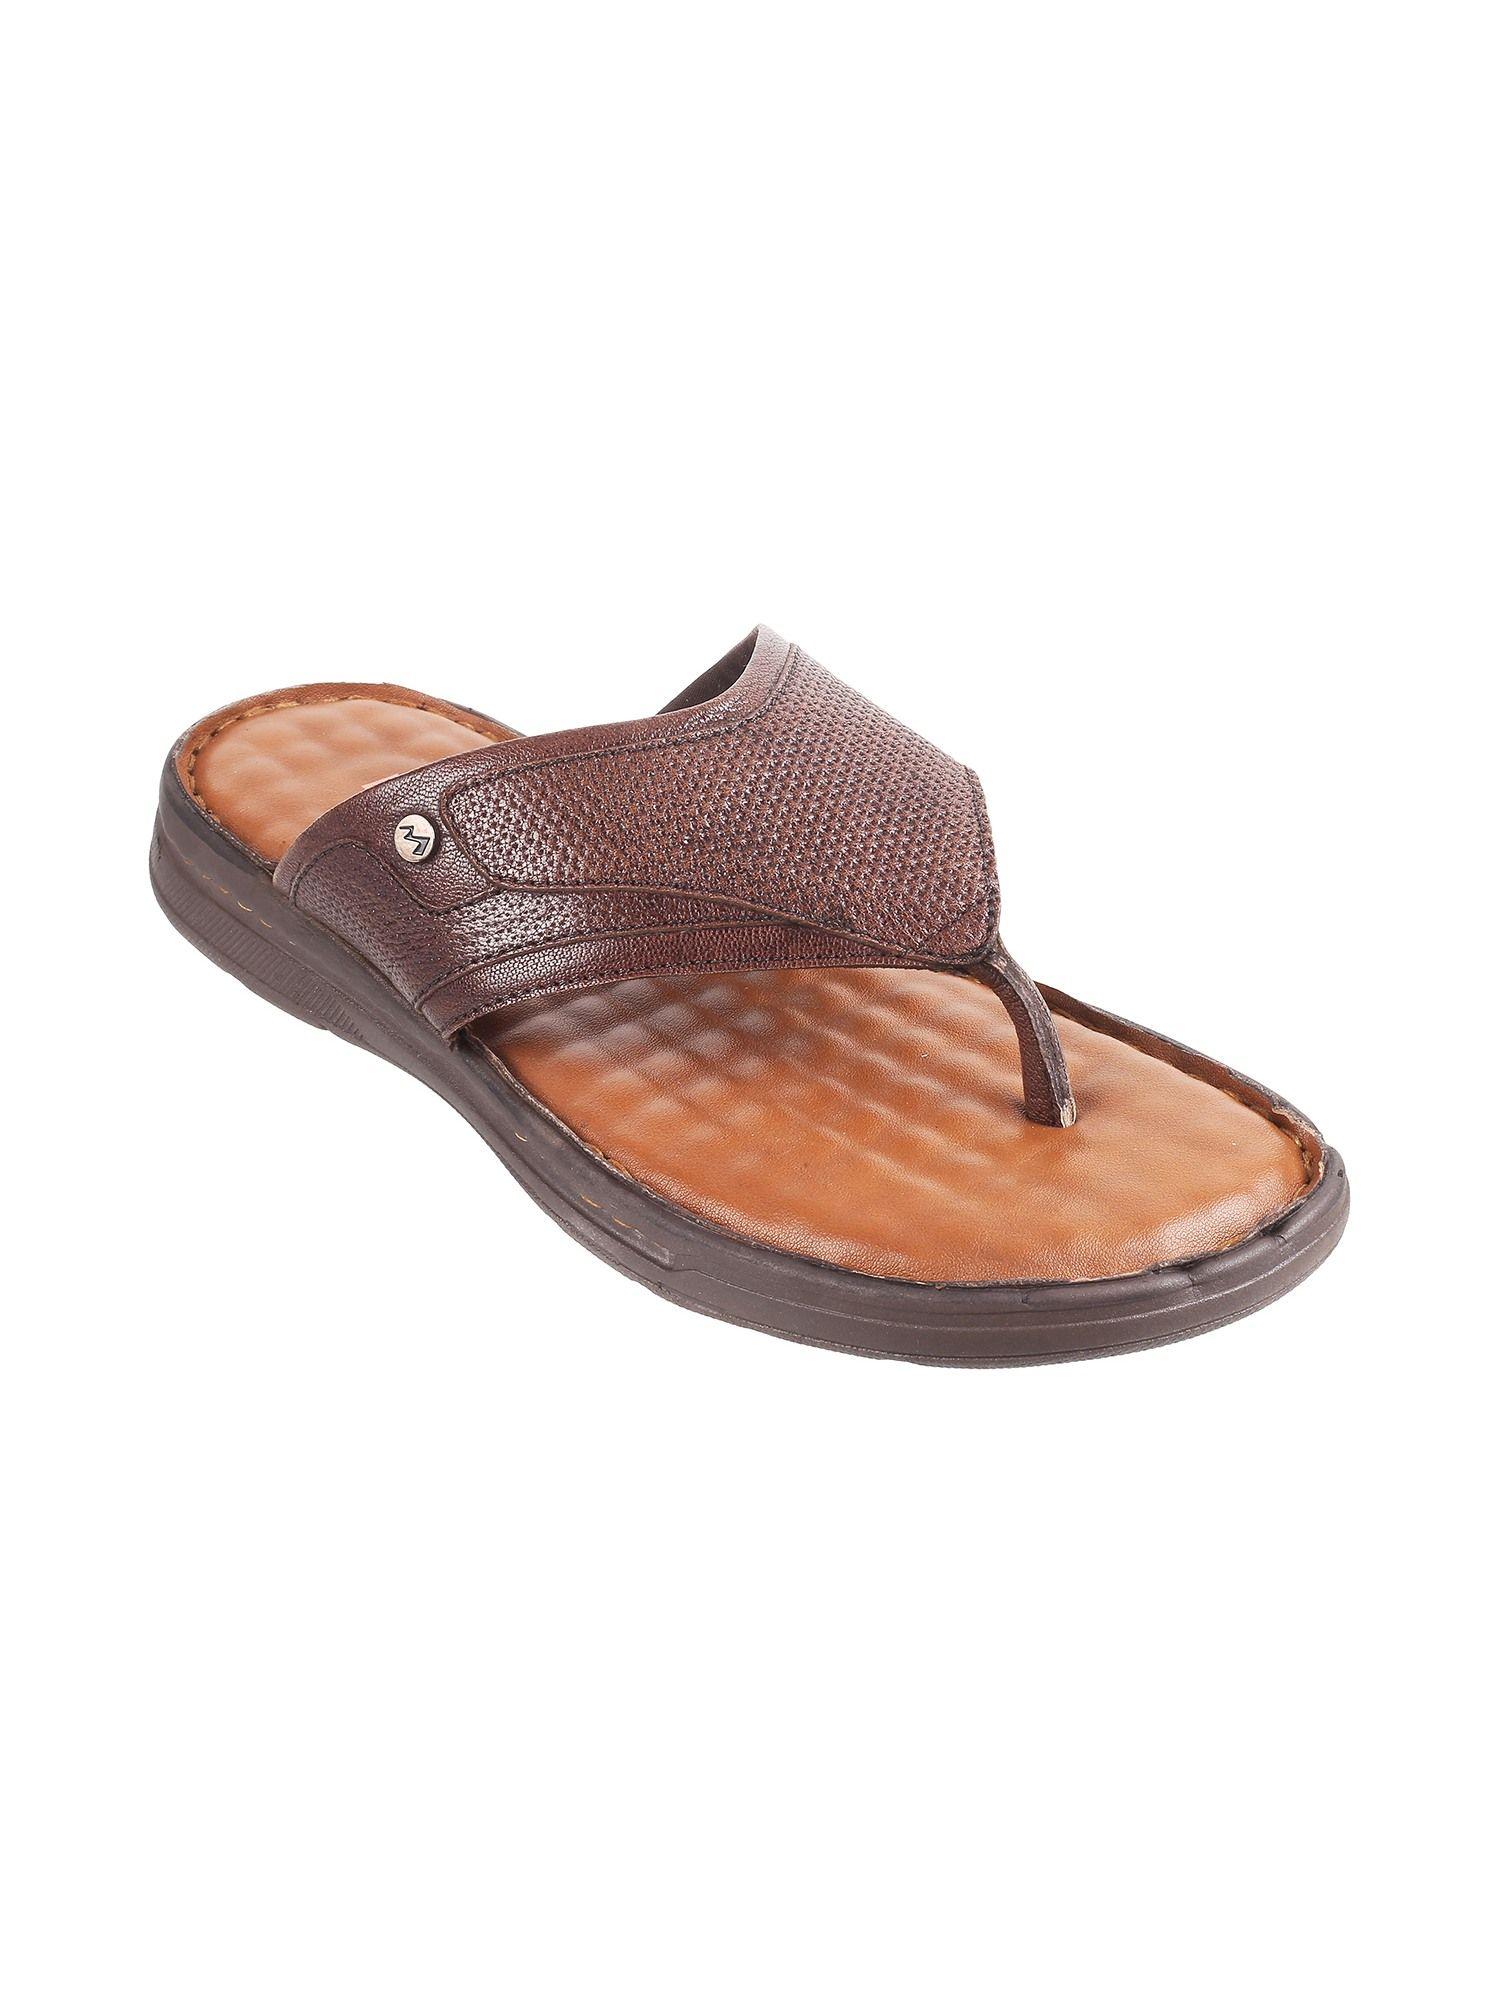 mens brown flat chappalsmetro men brown leather sandals